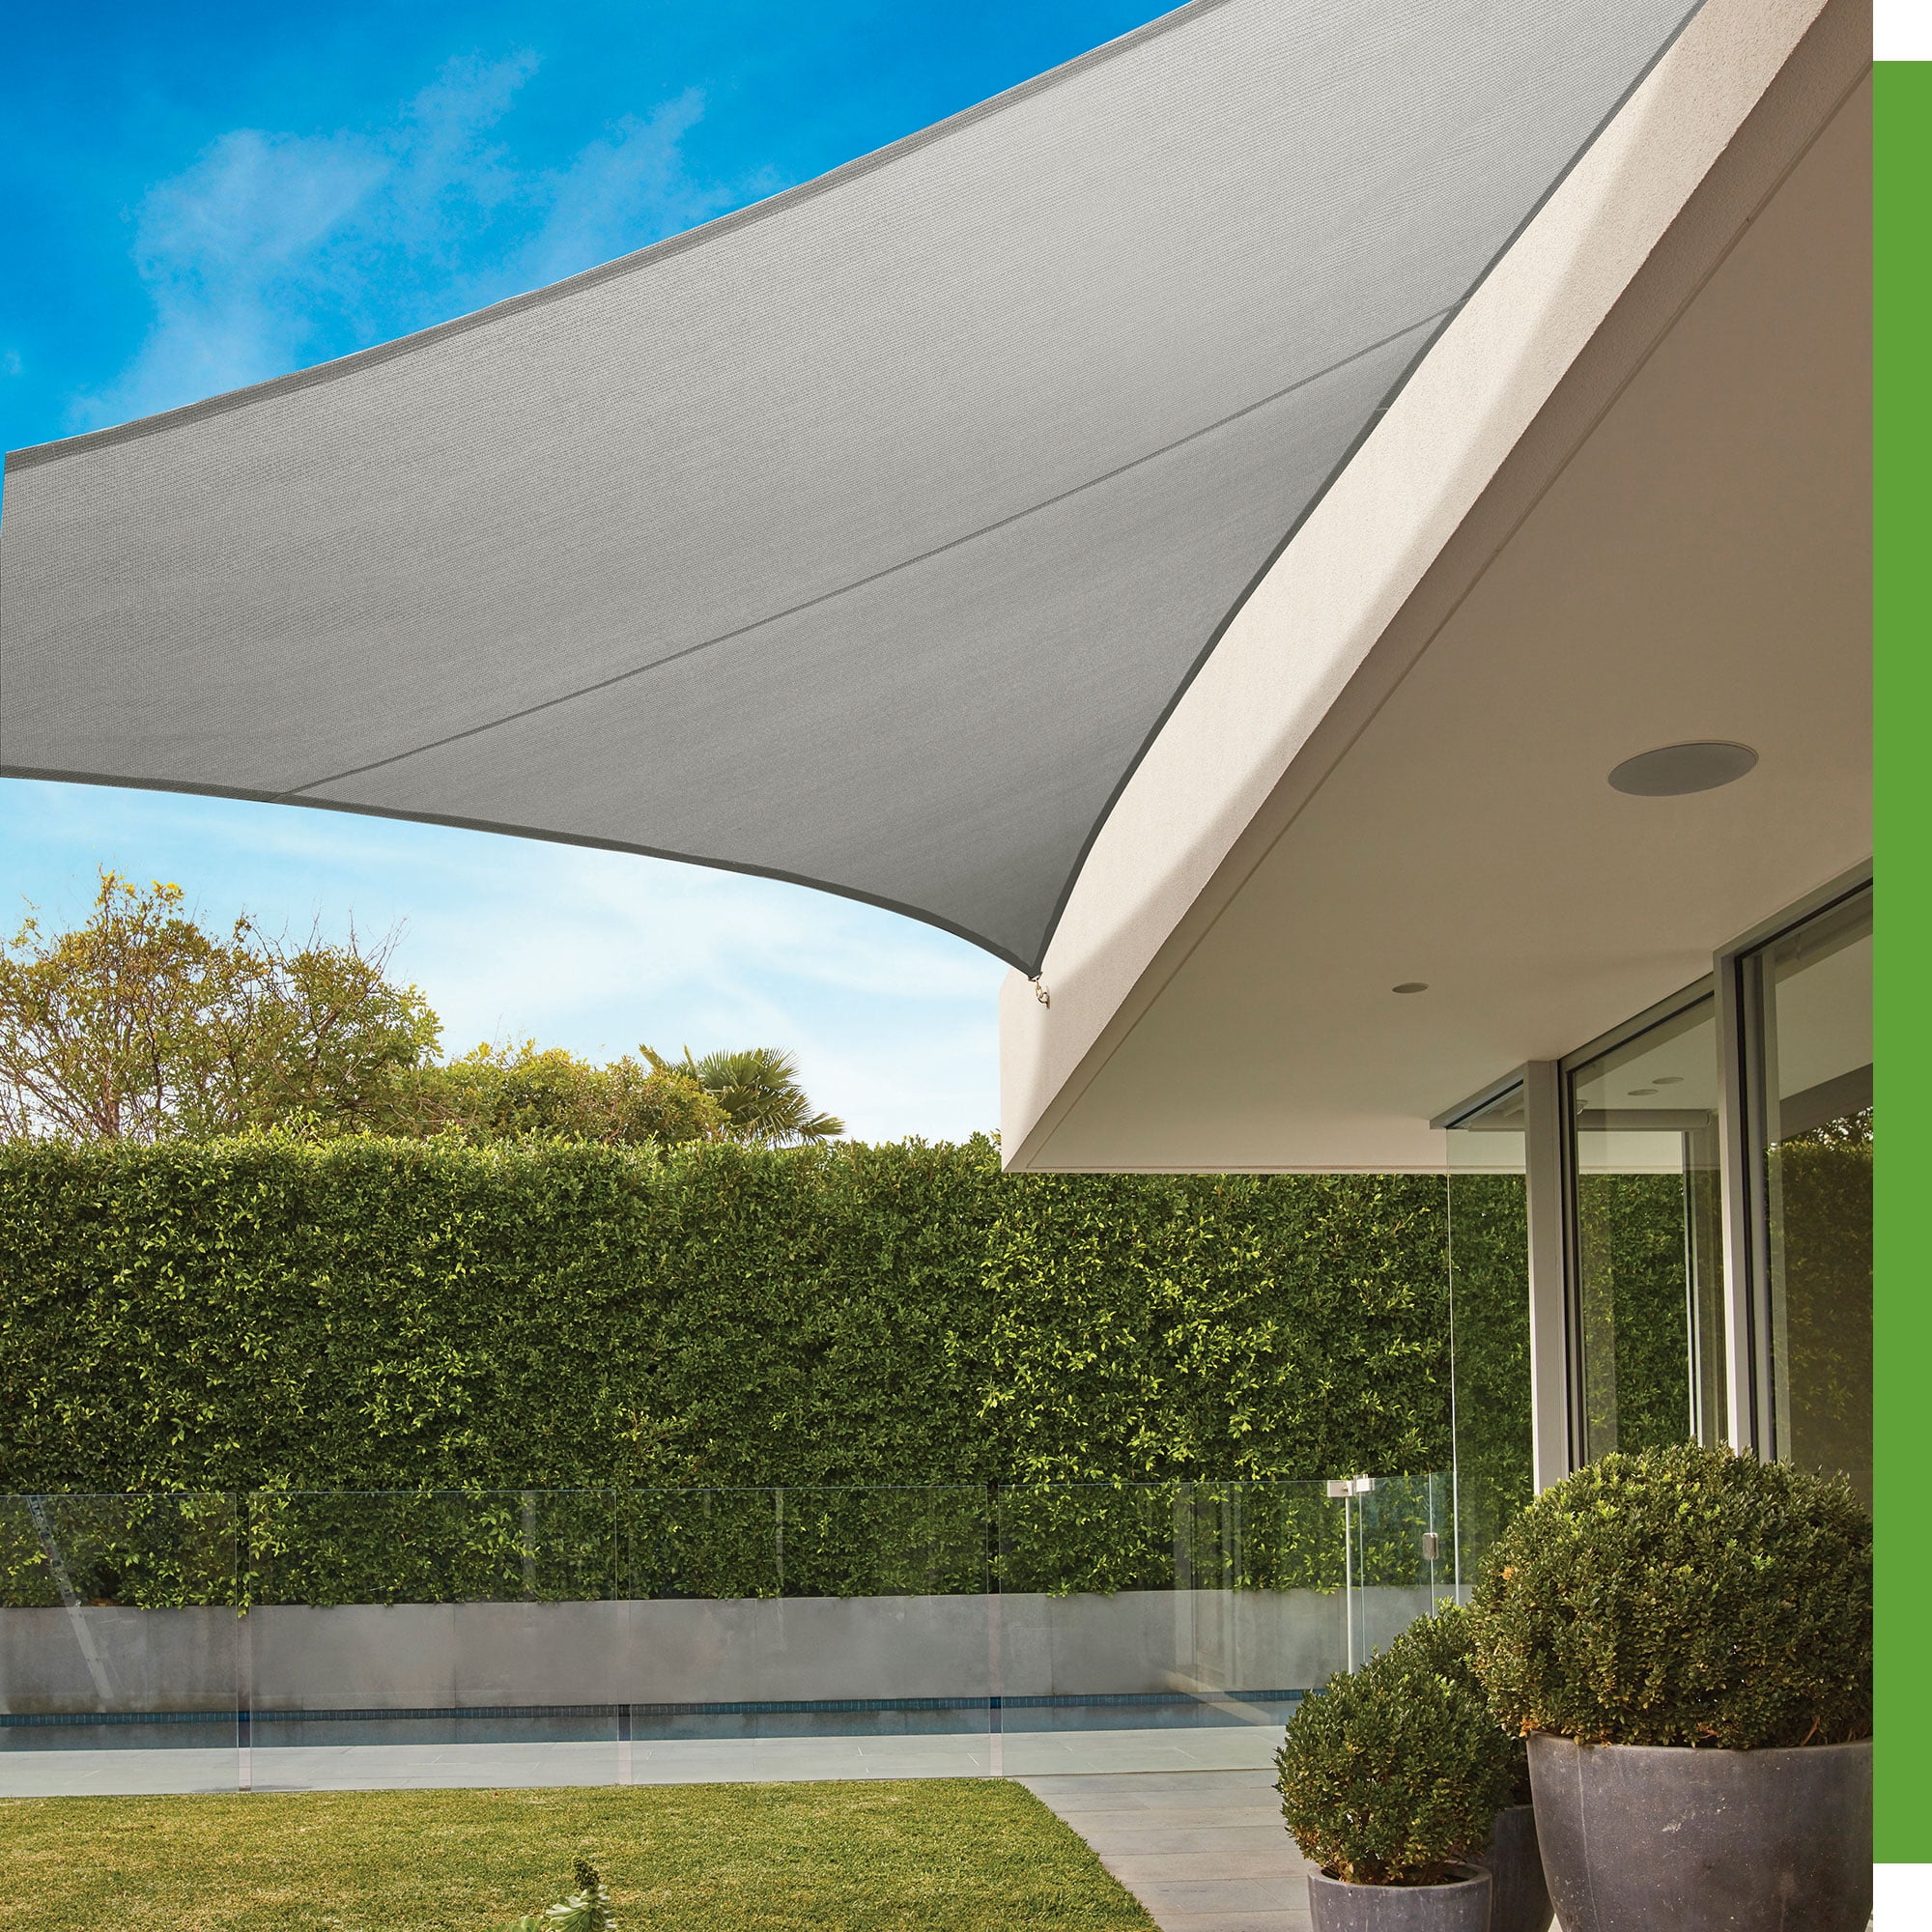 Details about   Sun Shade Sail Canopy Garden Patio Awning 90% UV Block Sunscreen Outdoor Screen 